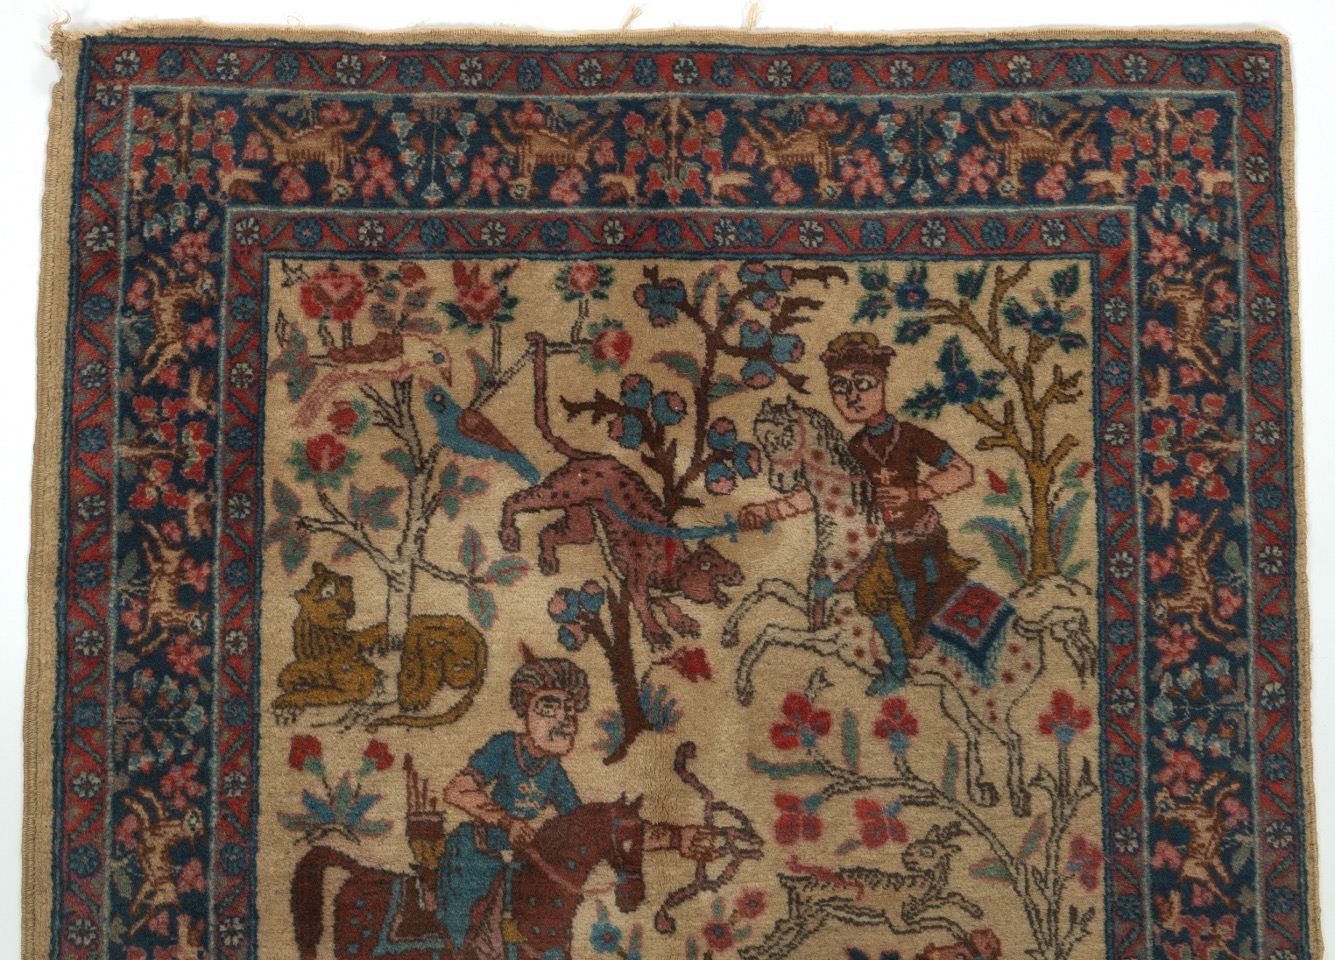 Tabriz Pictorial Hunting Carpet after 16th Century Safavid Design, ca. 1920's - Image 4 of 5